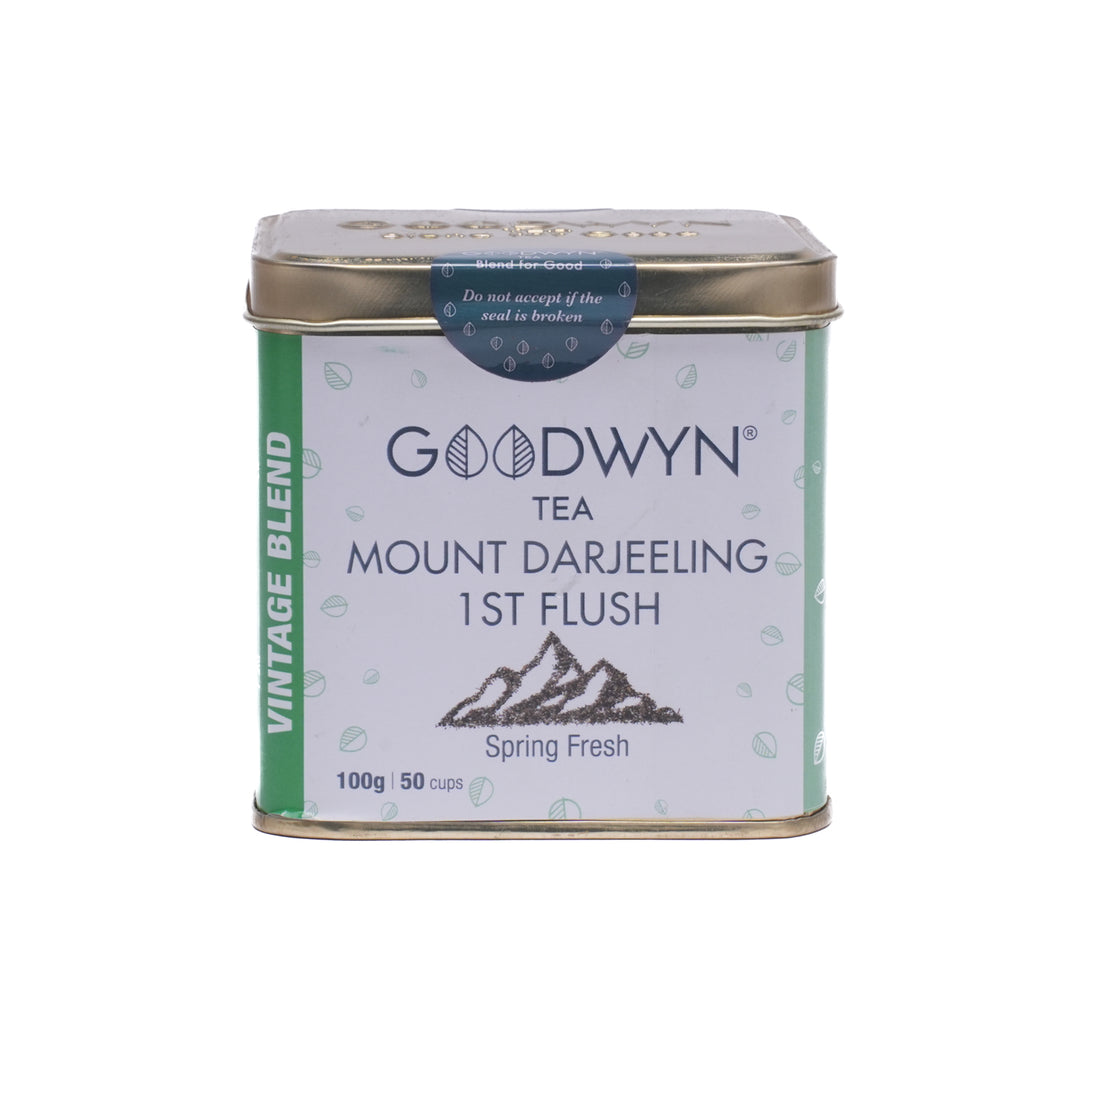 Mount Darjeeling 1st Flush Tea